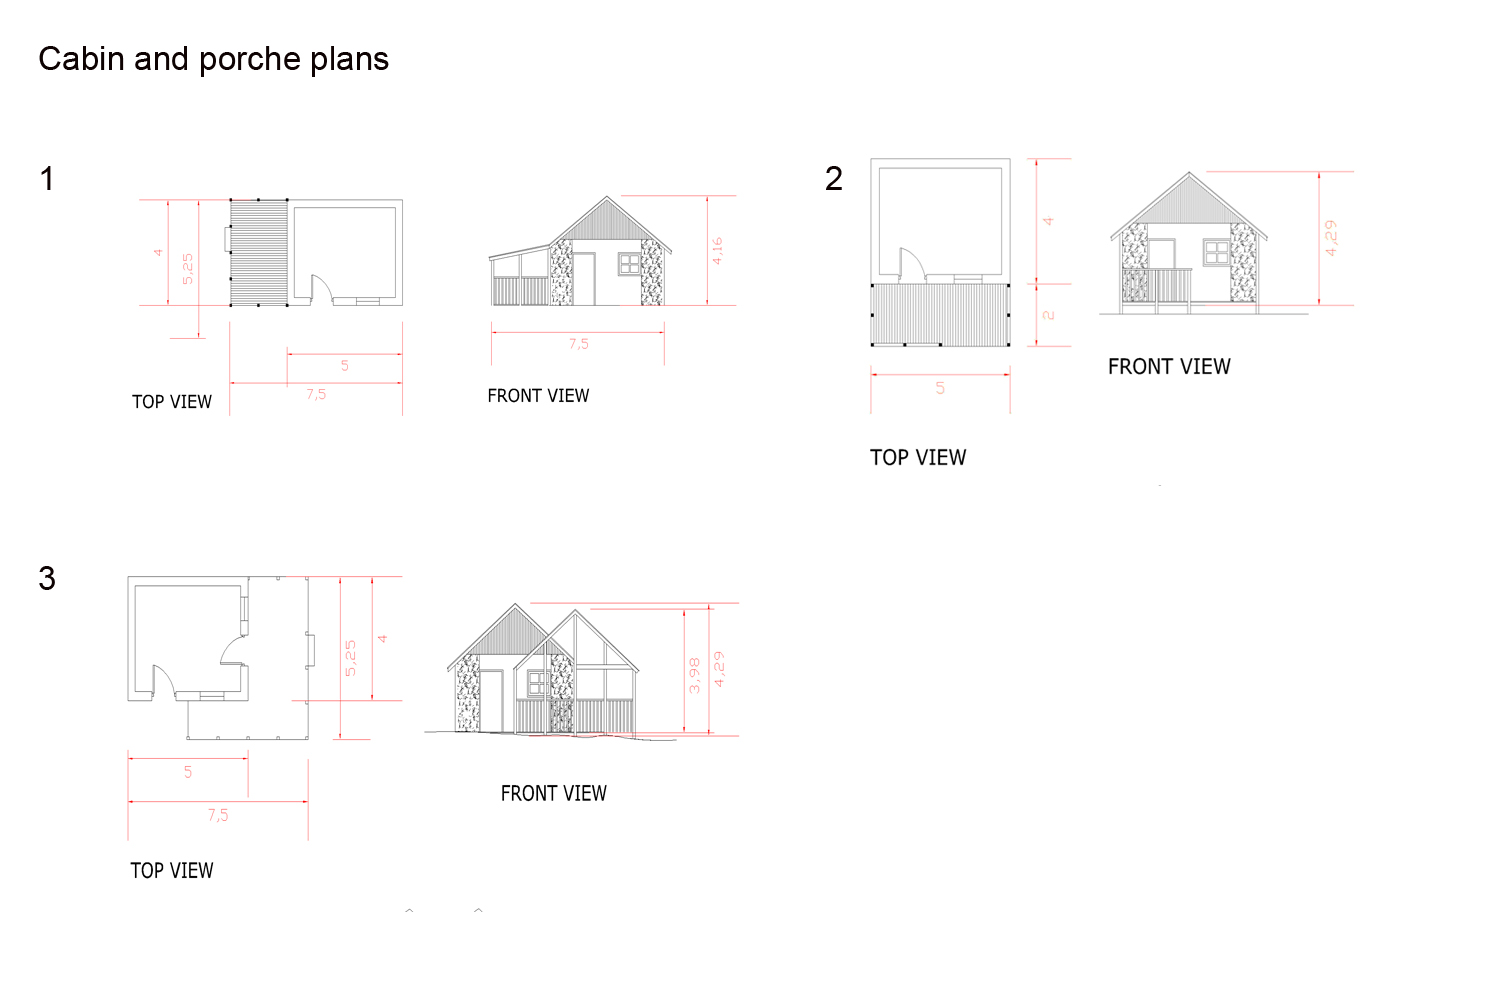 2 cabin and porche plans.jpg